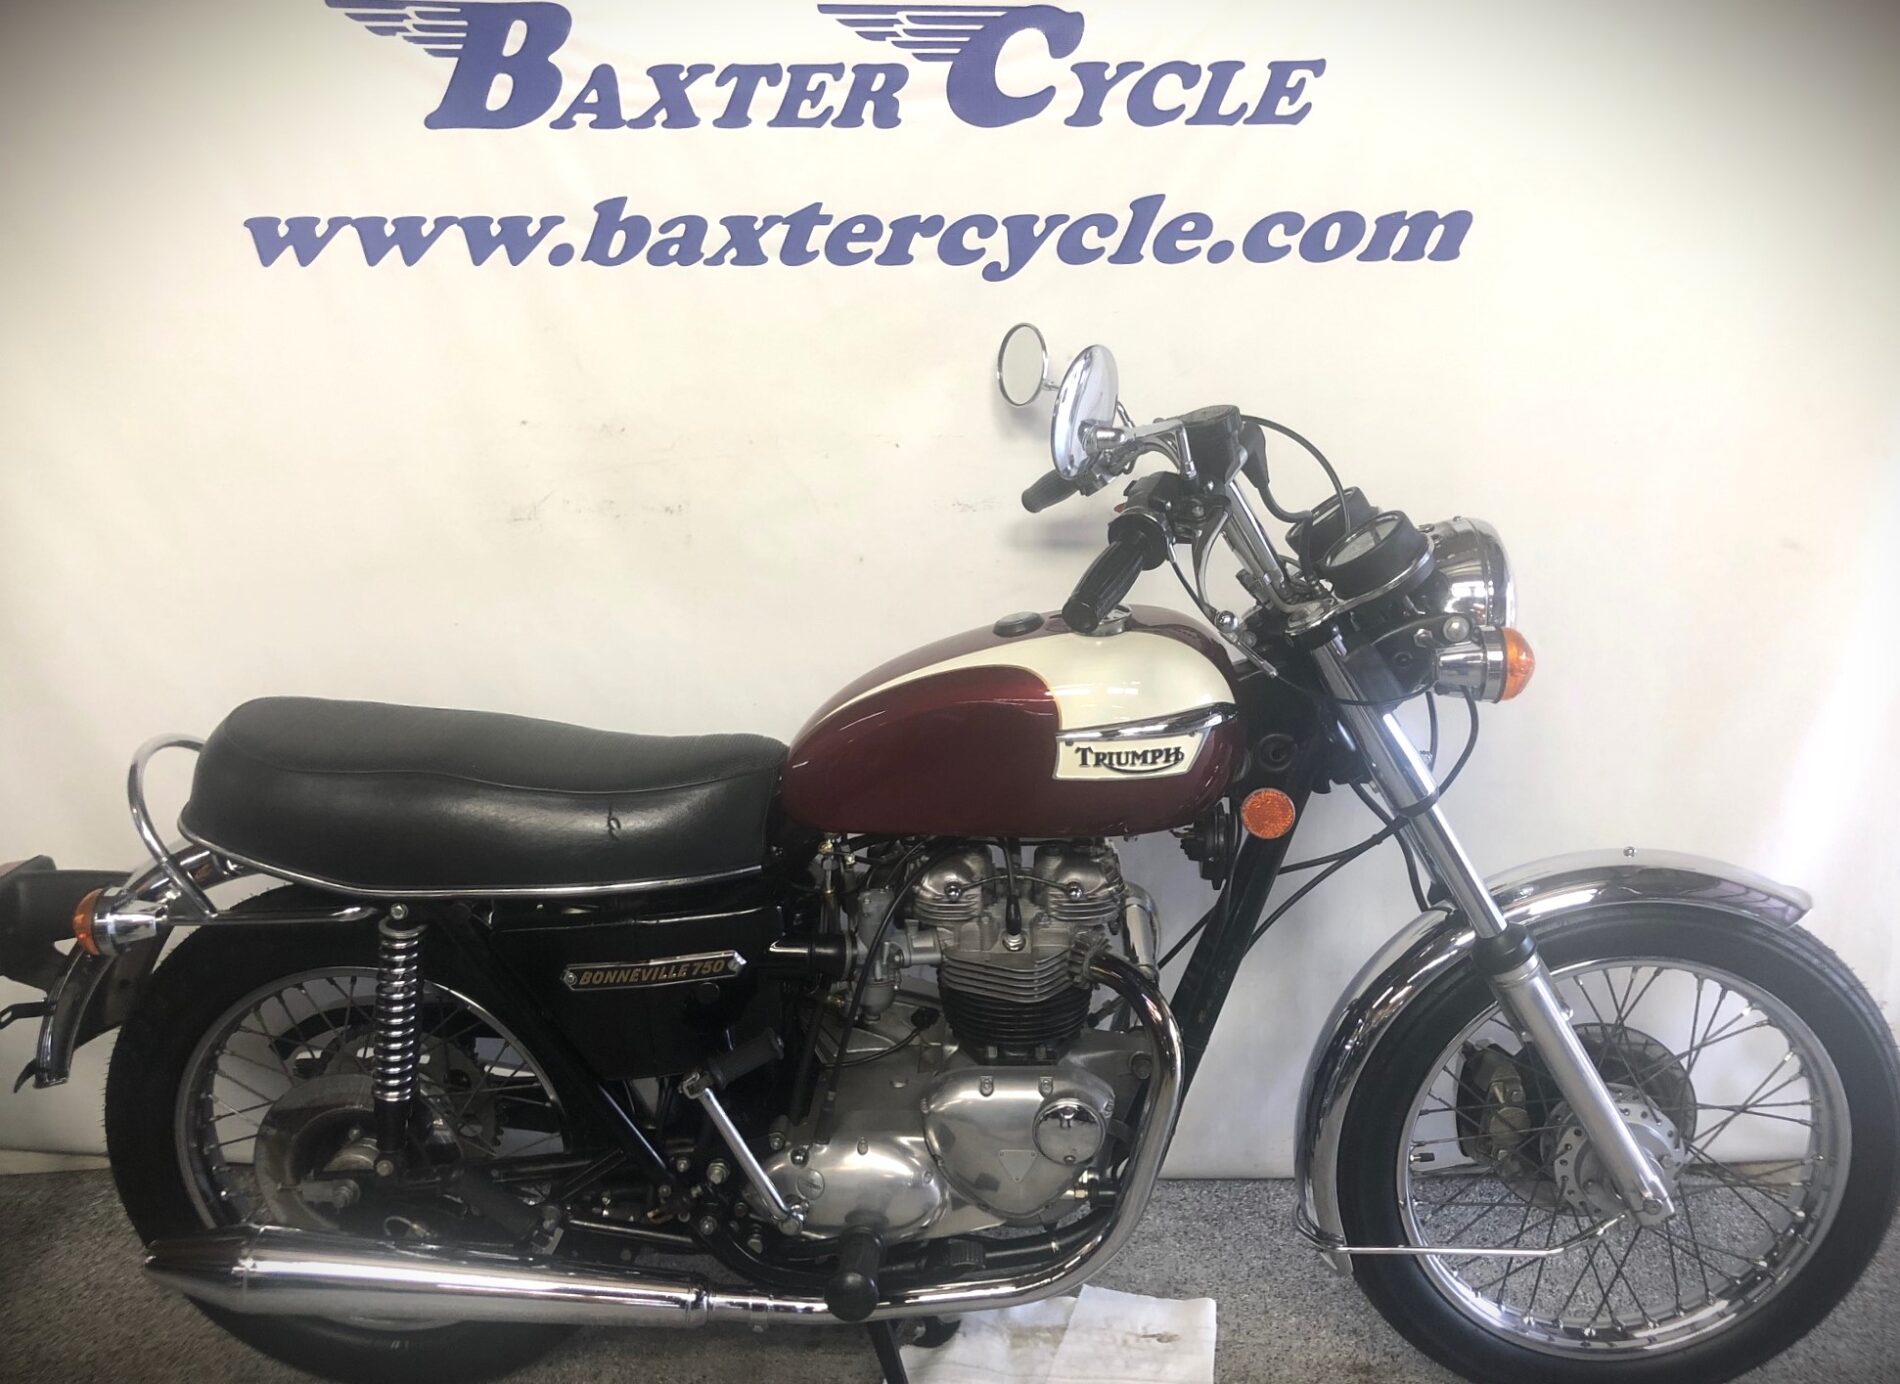 Chain Wax – Baxter Cycle